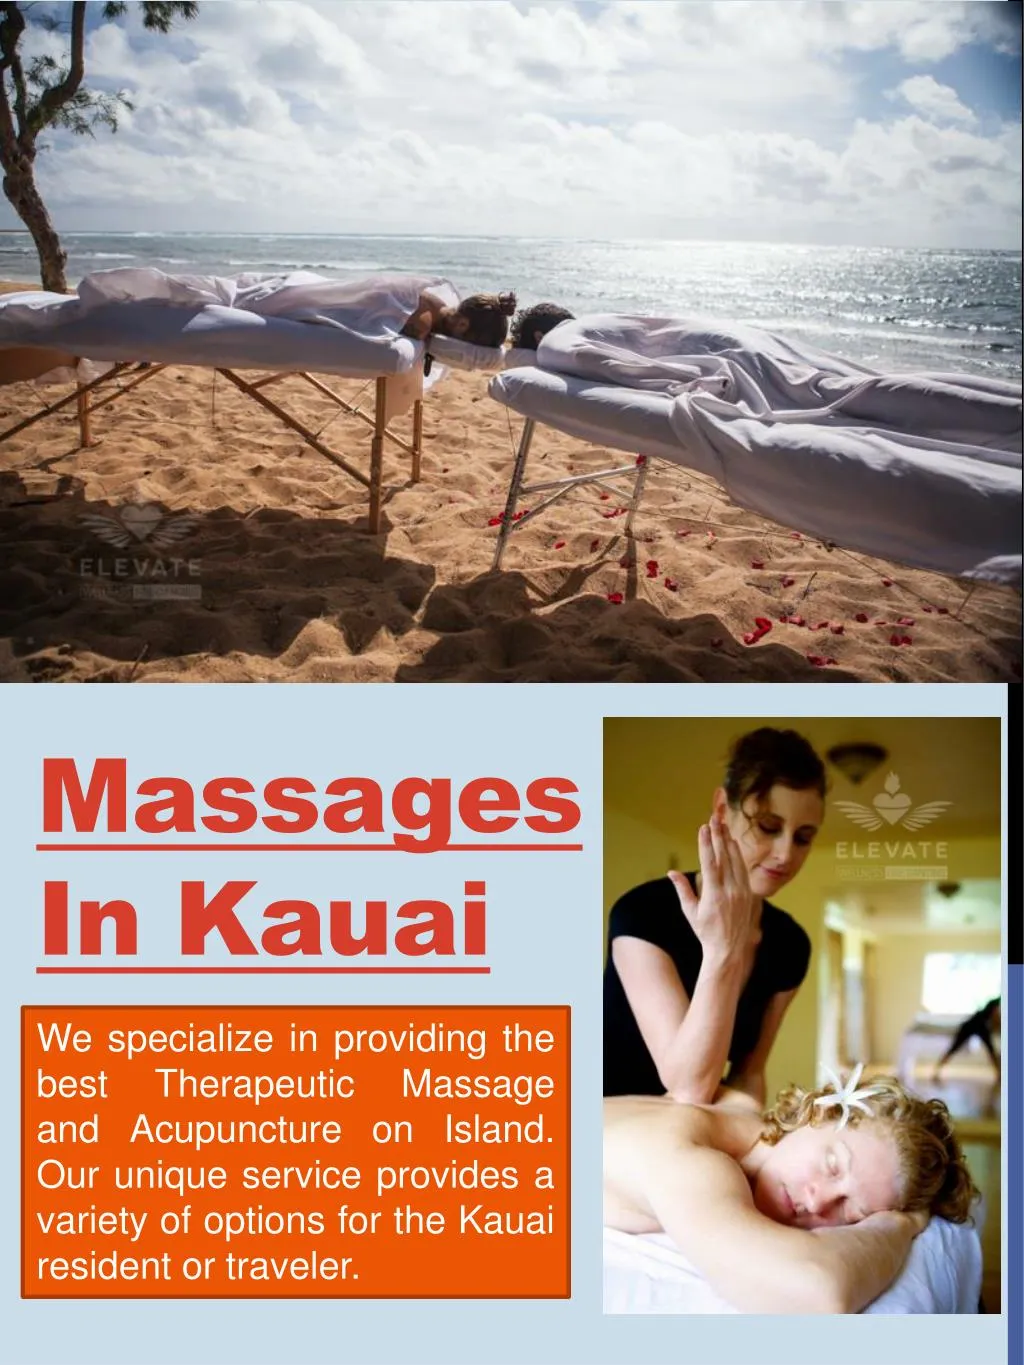 massages in kauai